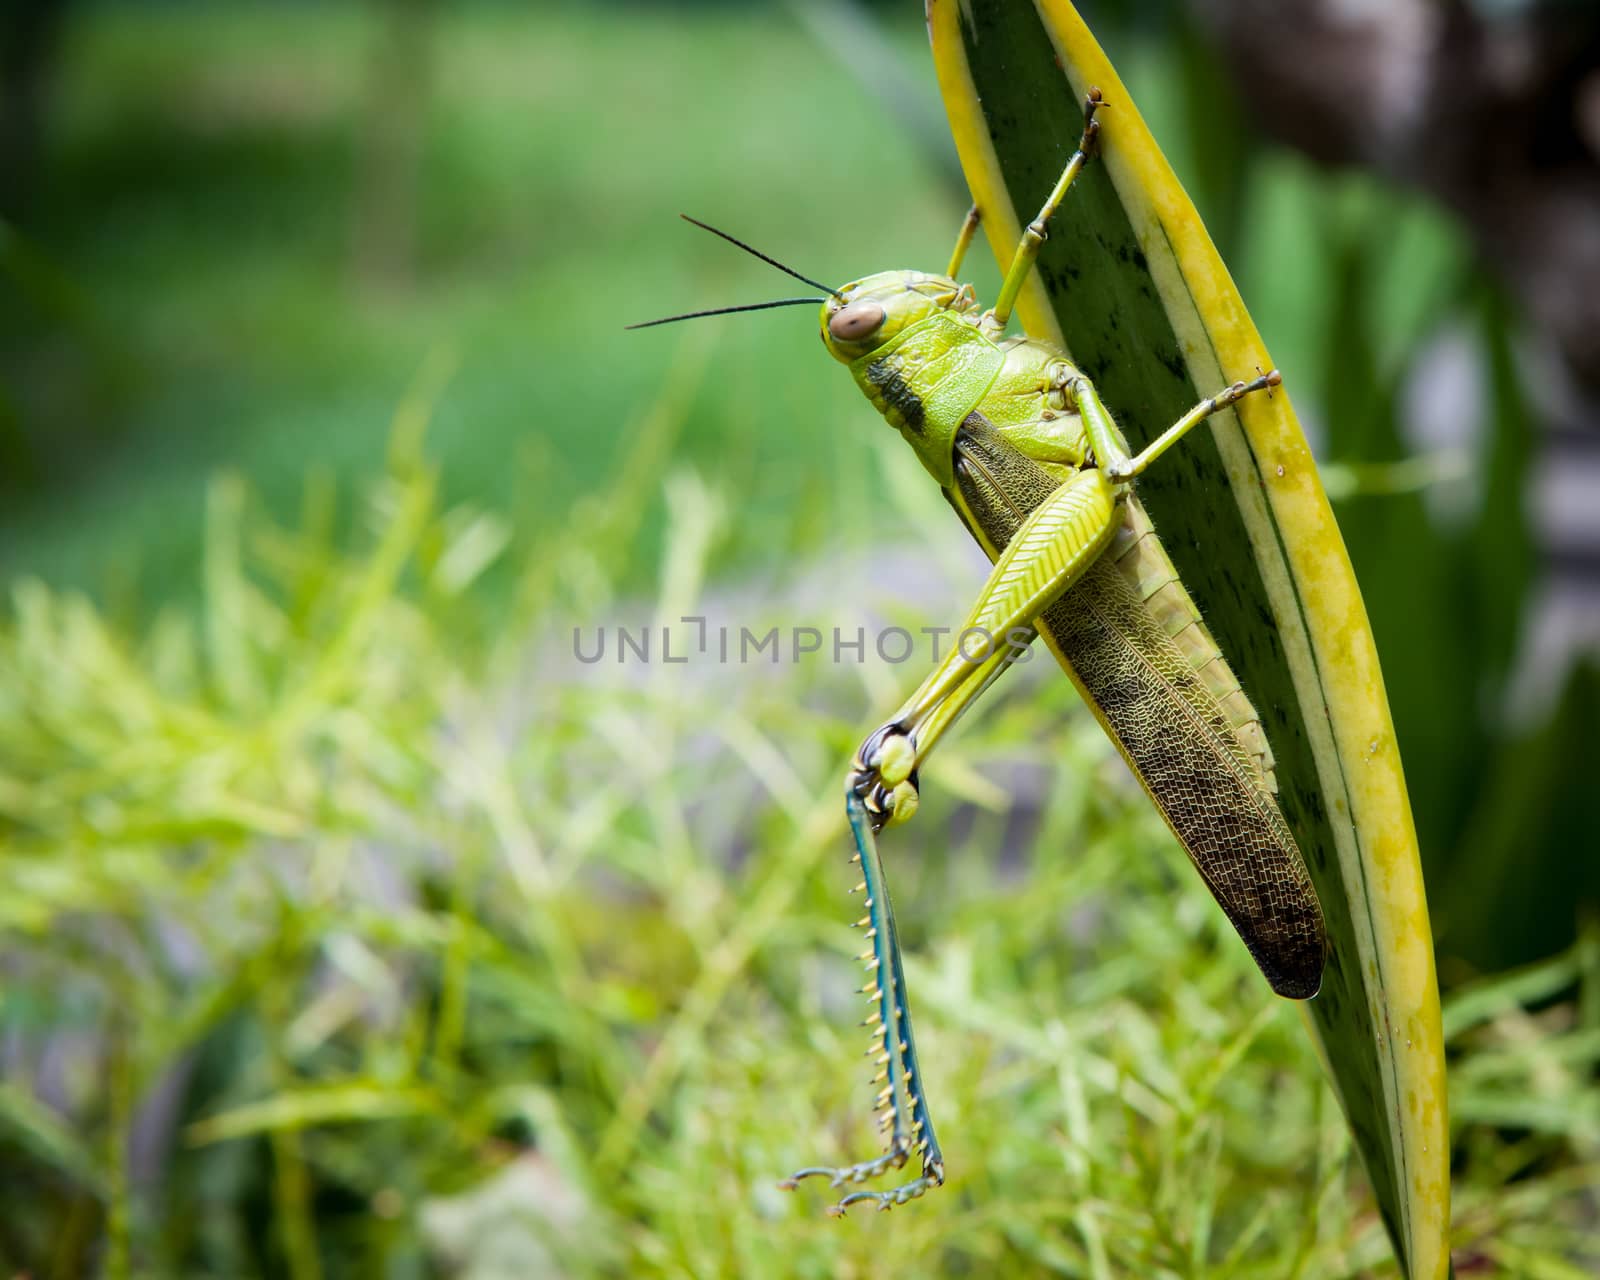 Grasshopper on a leaf by juhku